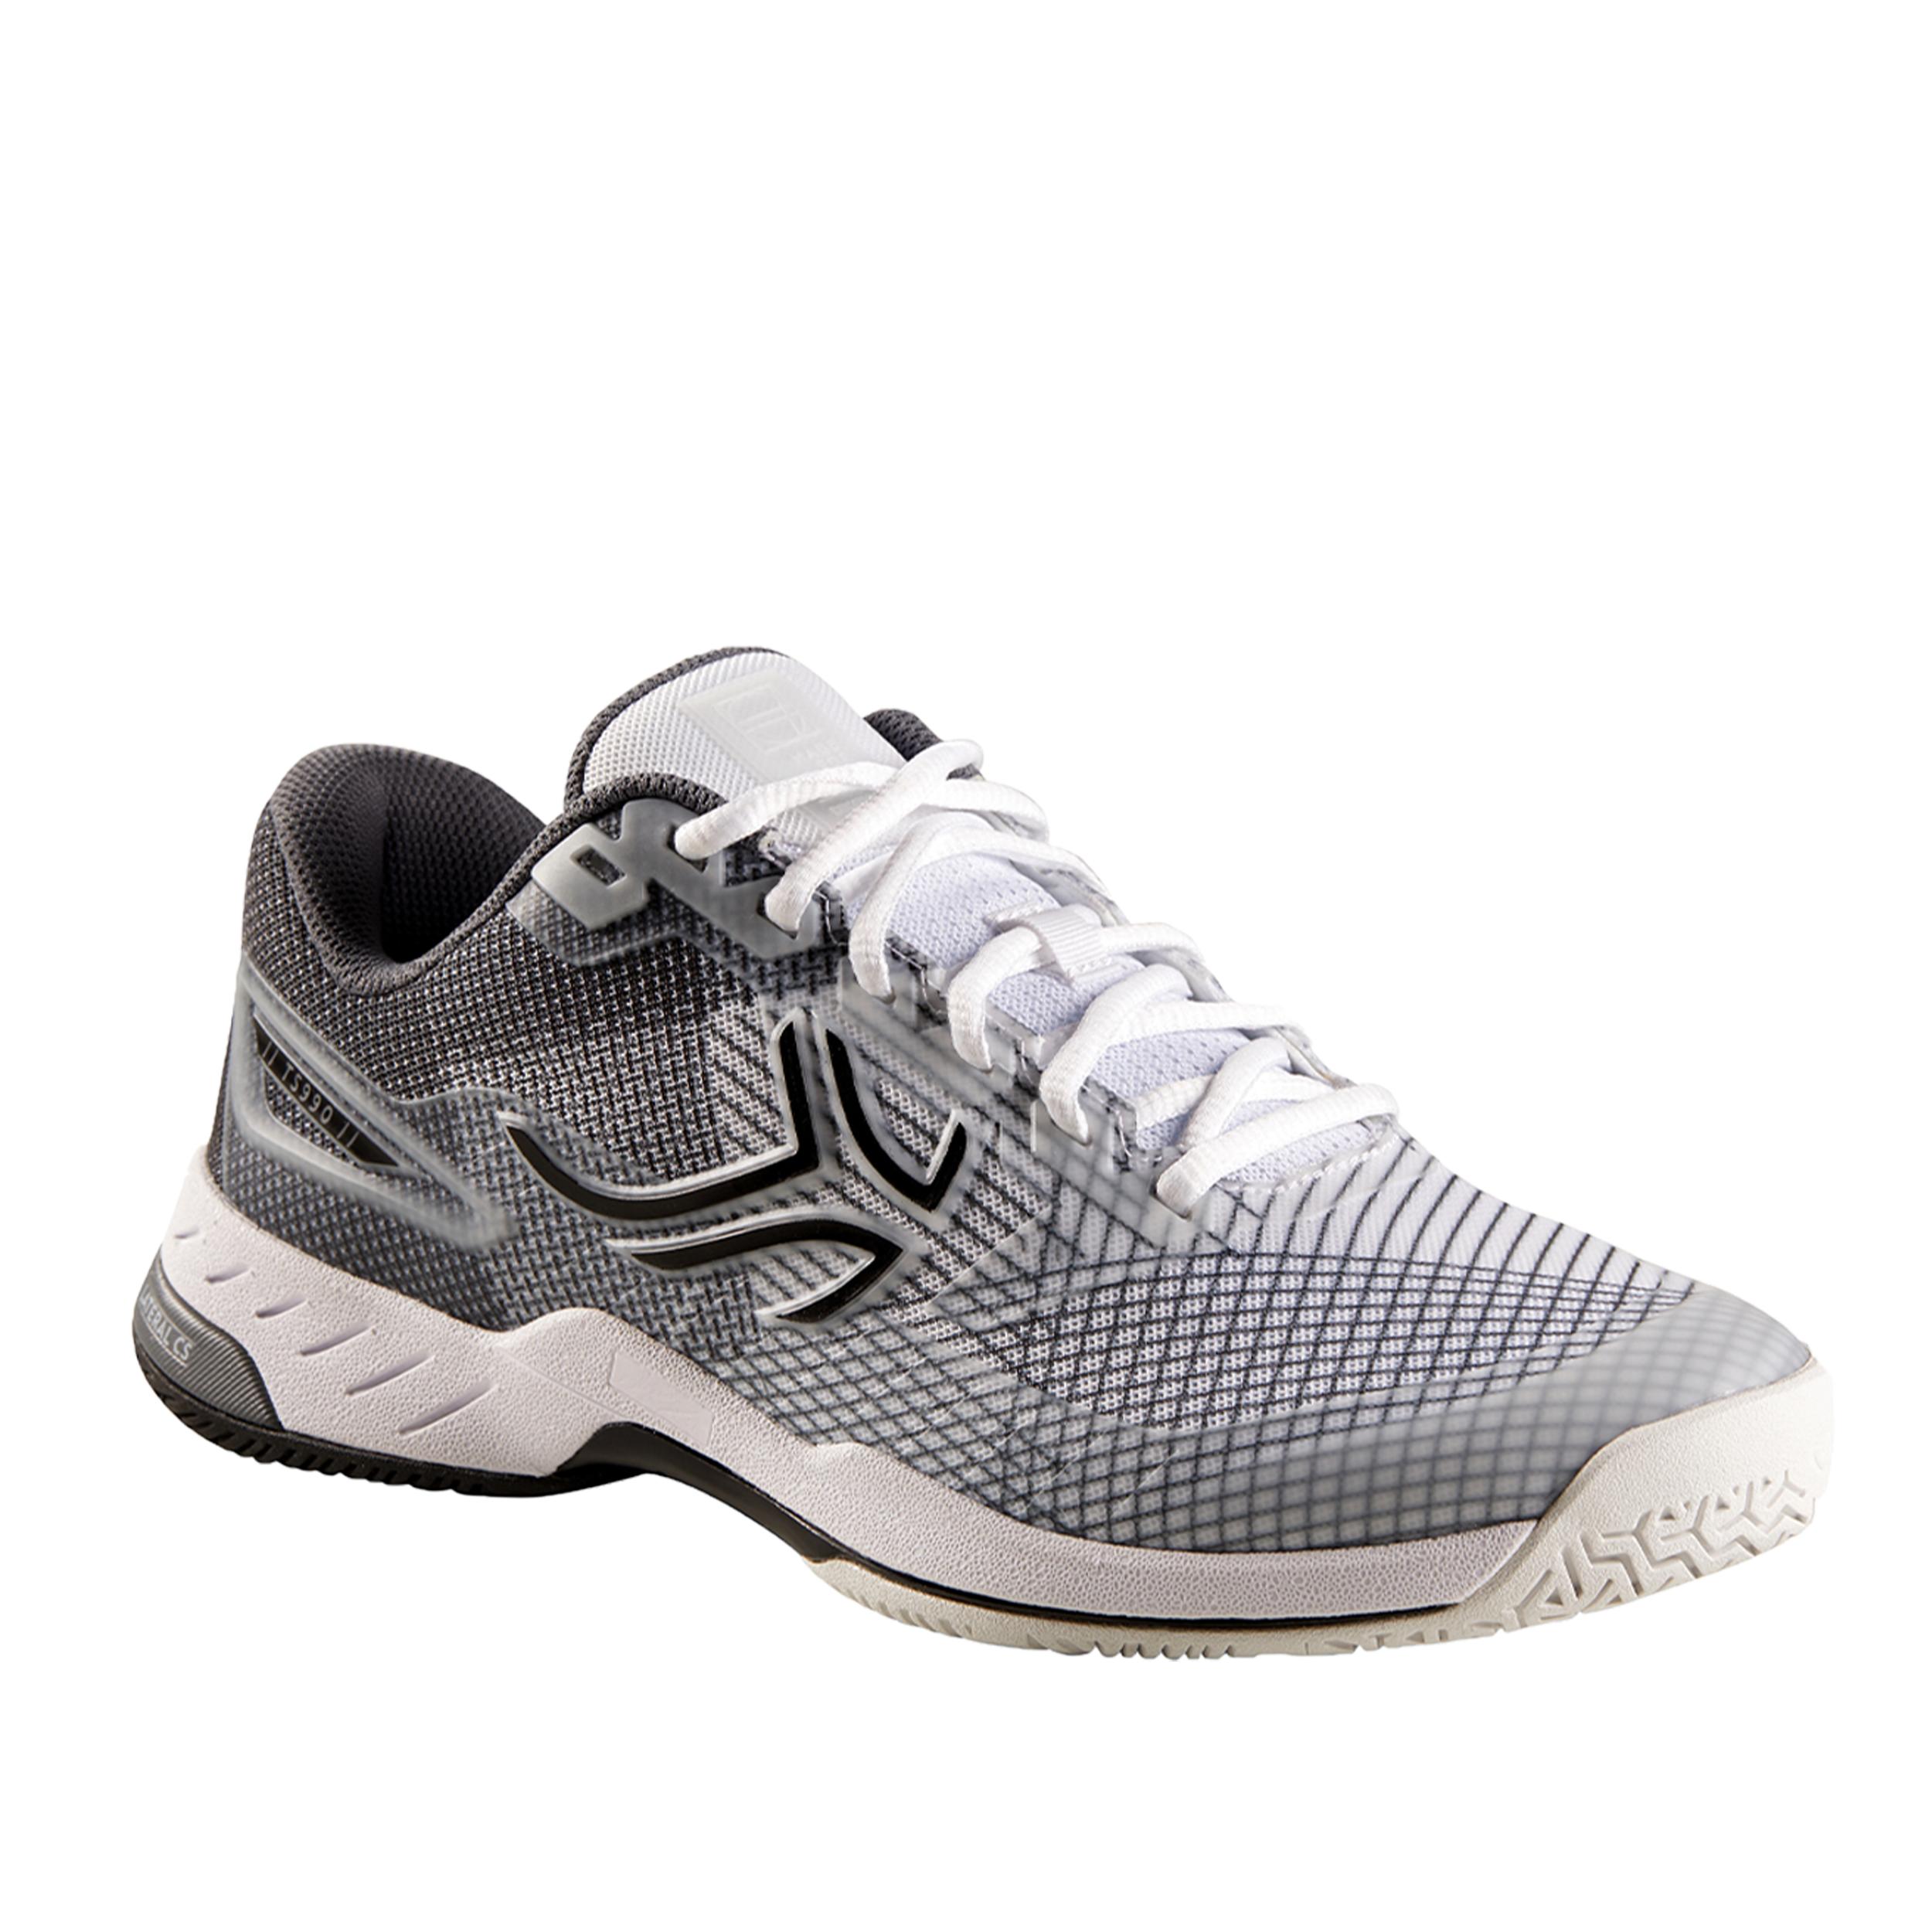 Buy Multi-Court Tennis Shoes TS990 - White Online | Decathlon